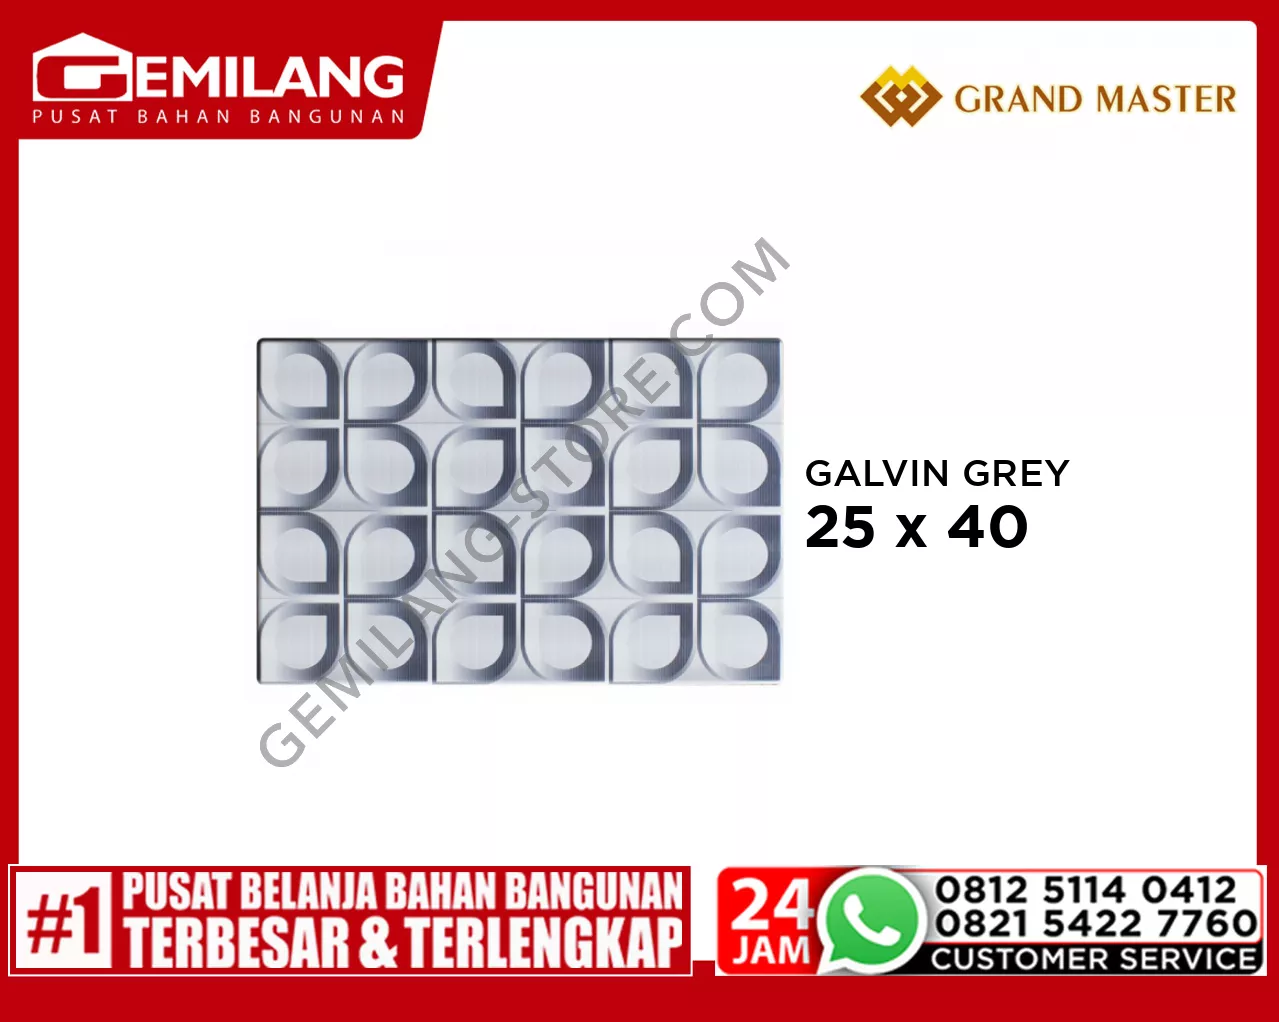 GRAND MASTER GALVIN GREY 25 x 40